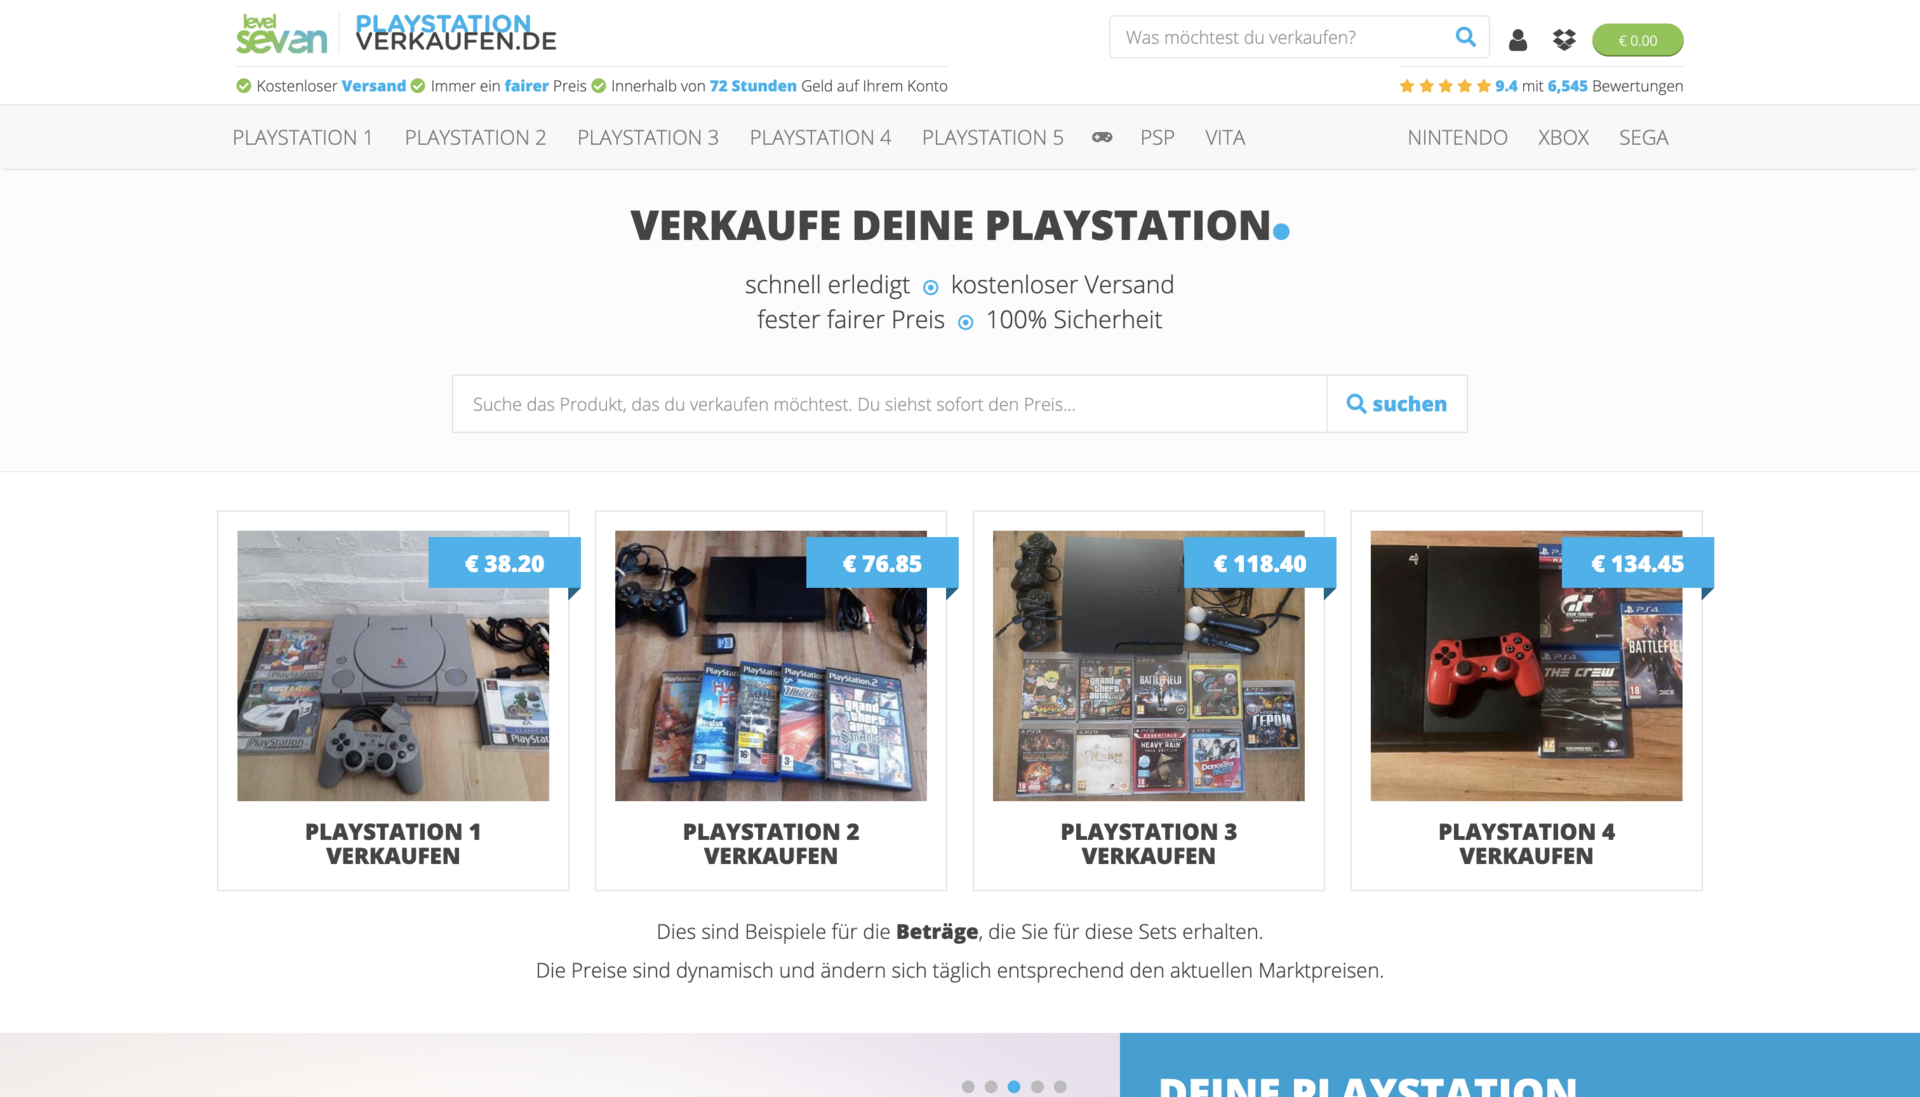 PlaystationVerkaufen.de